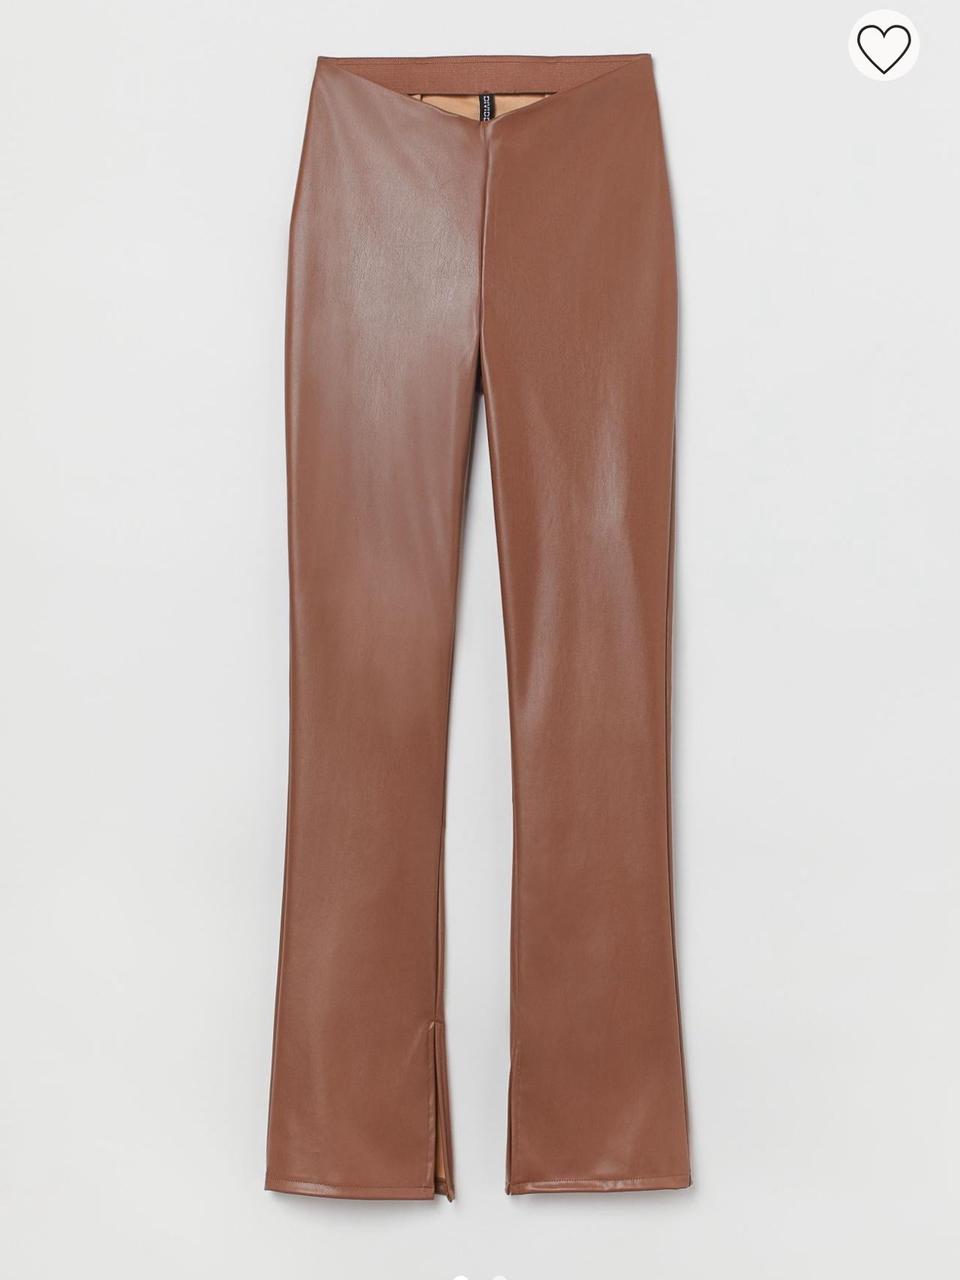 Brown faux leather pants H&M flared leggings I've - Depop